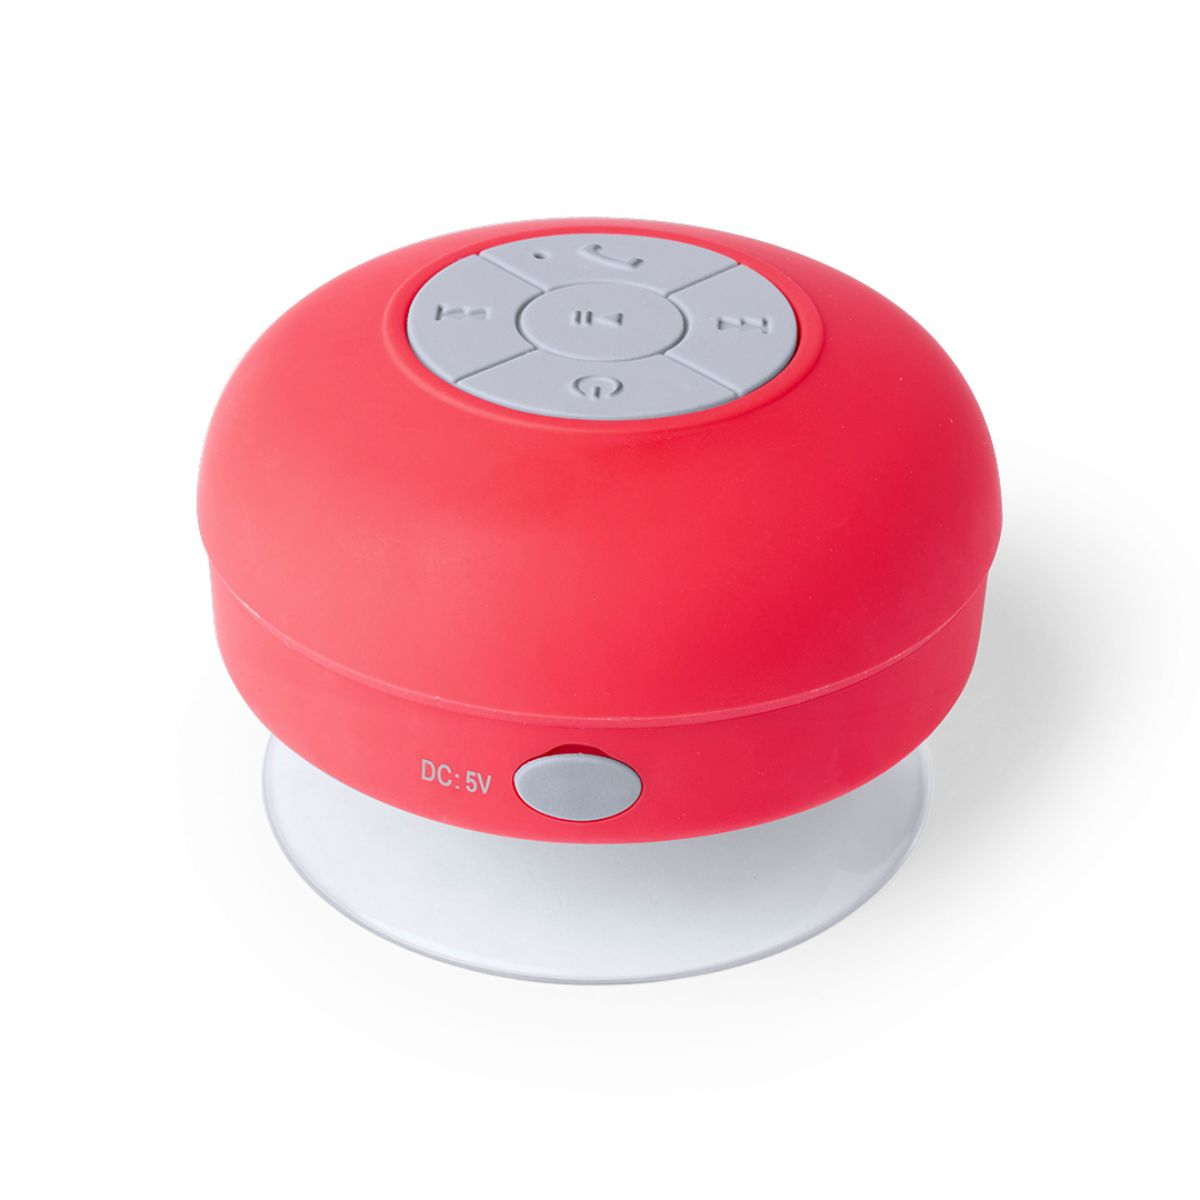 Altavoz Wireless Bluetooth 3w ducha rojo smartek smtk4929r